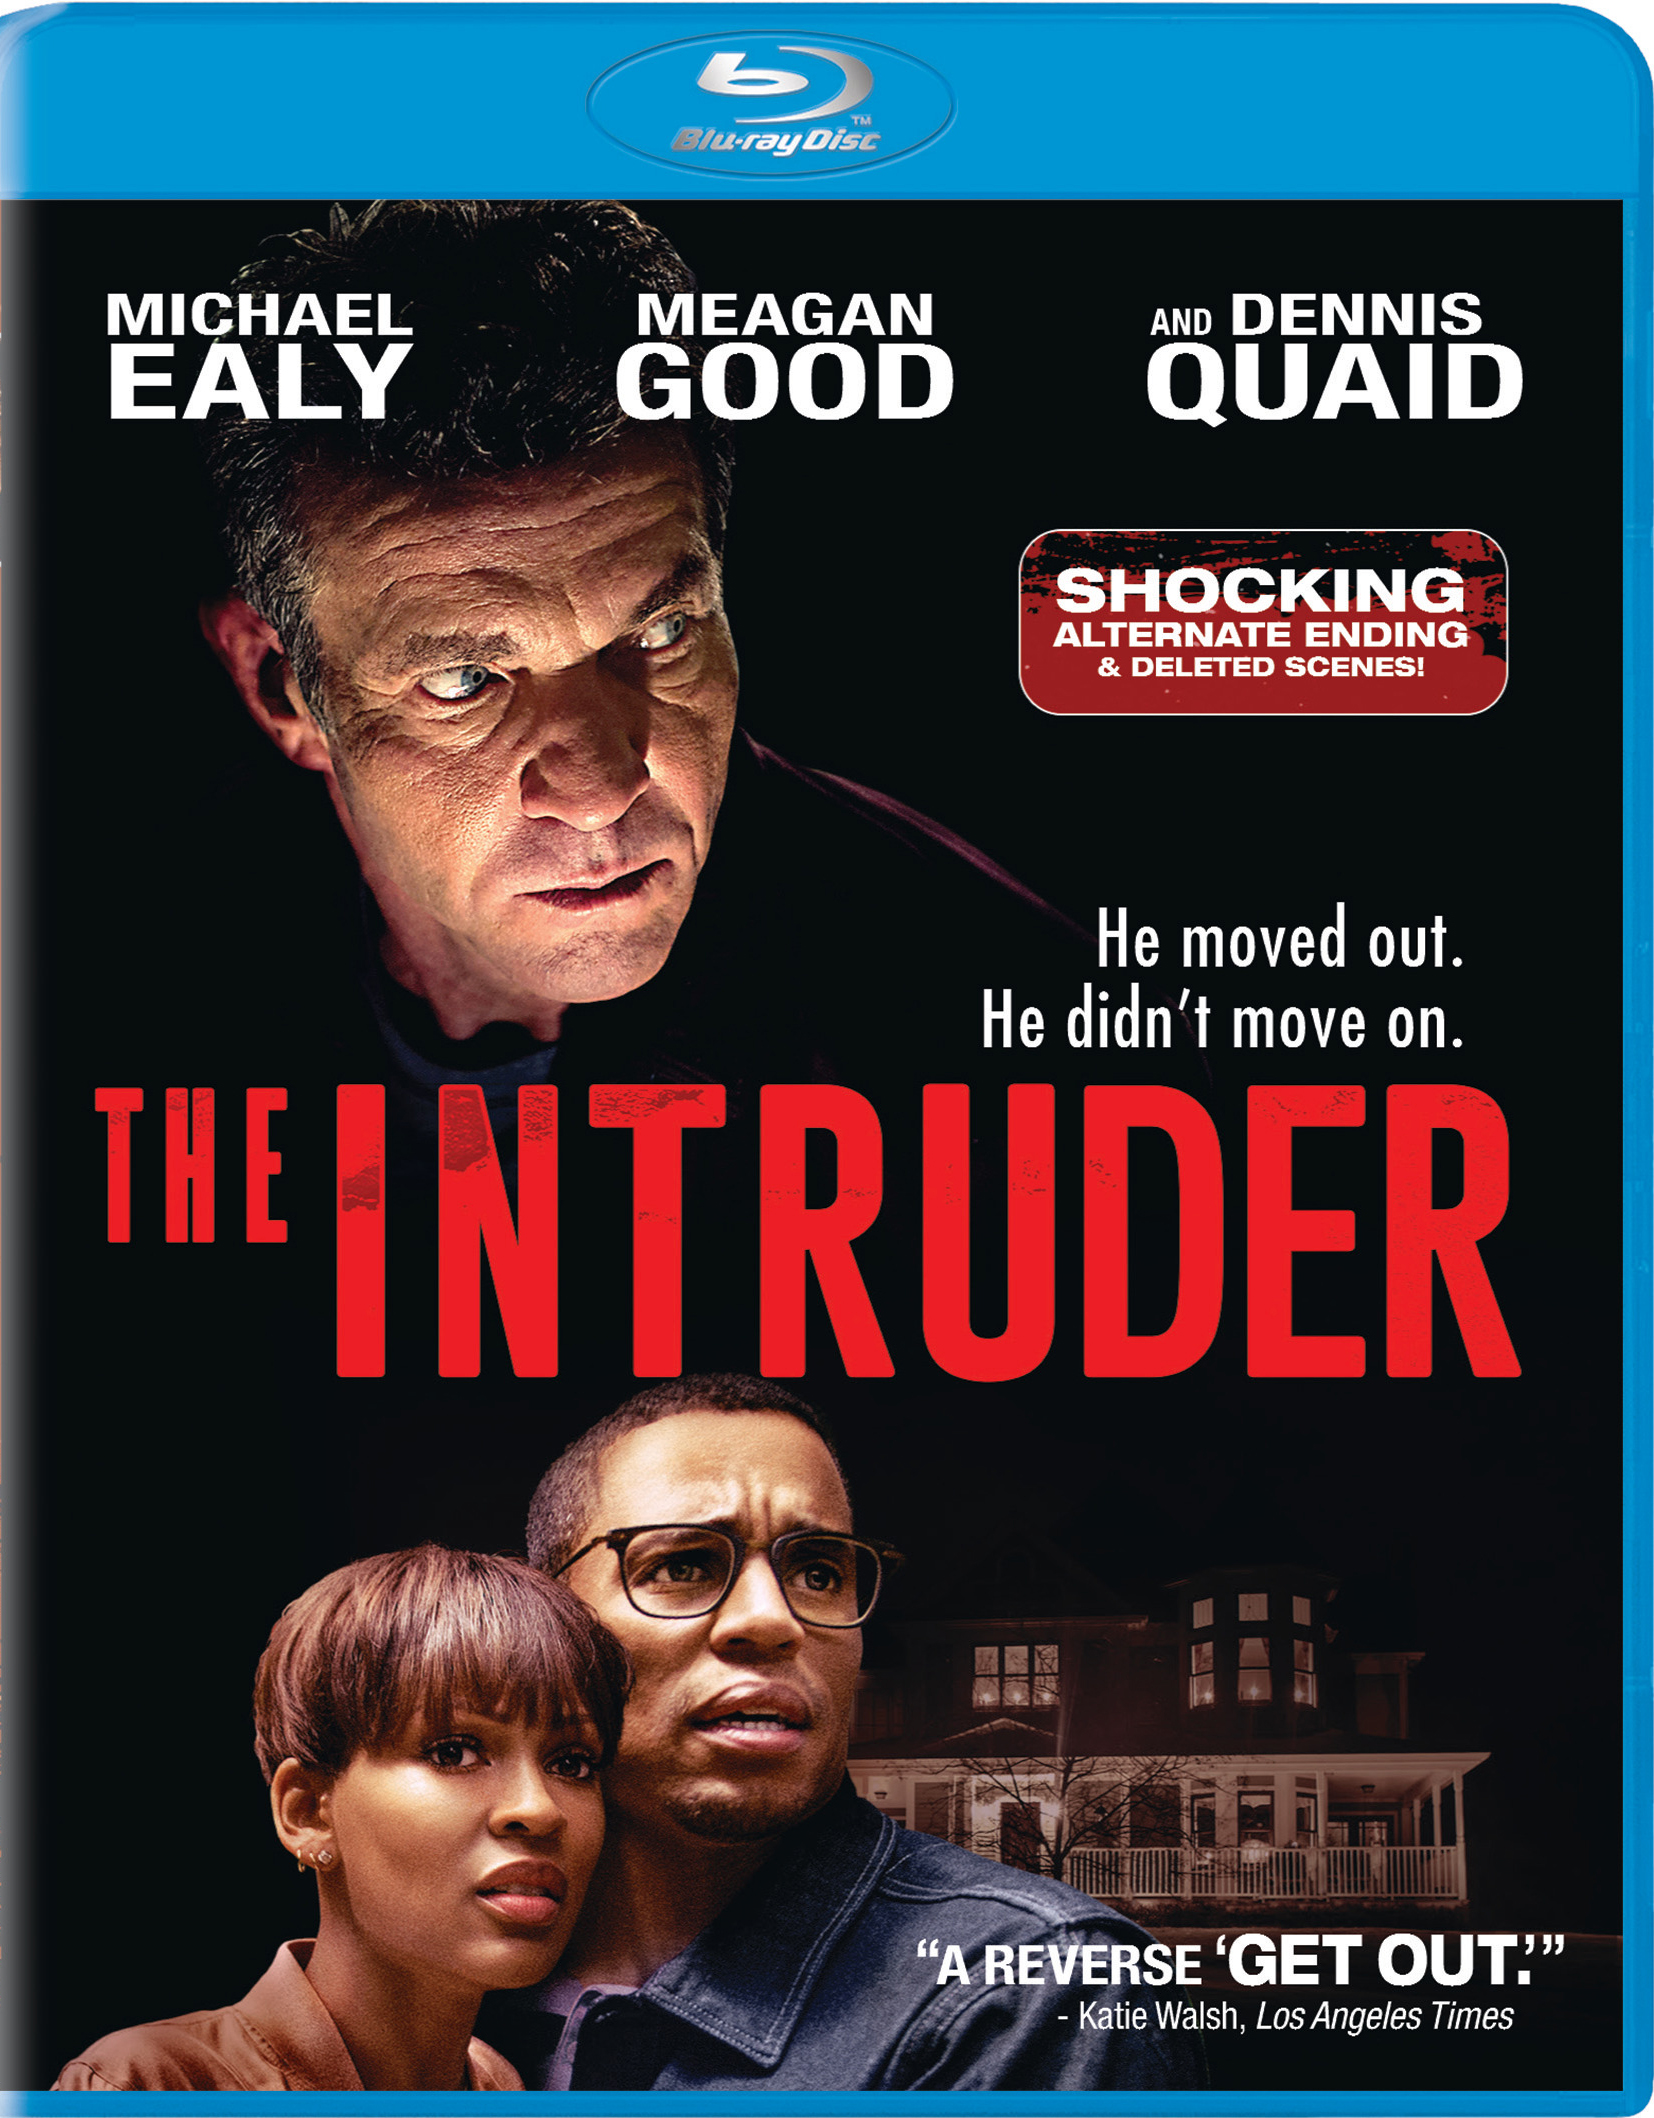 The Intruders Trailer - On Blu-ray & Digital HD 2/23! 